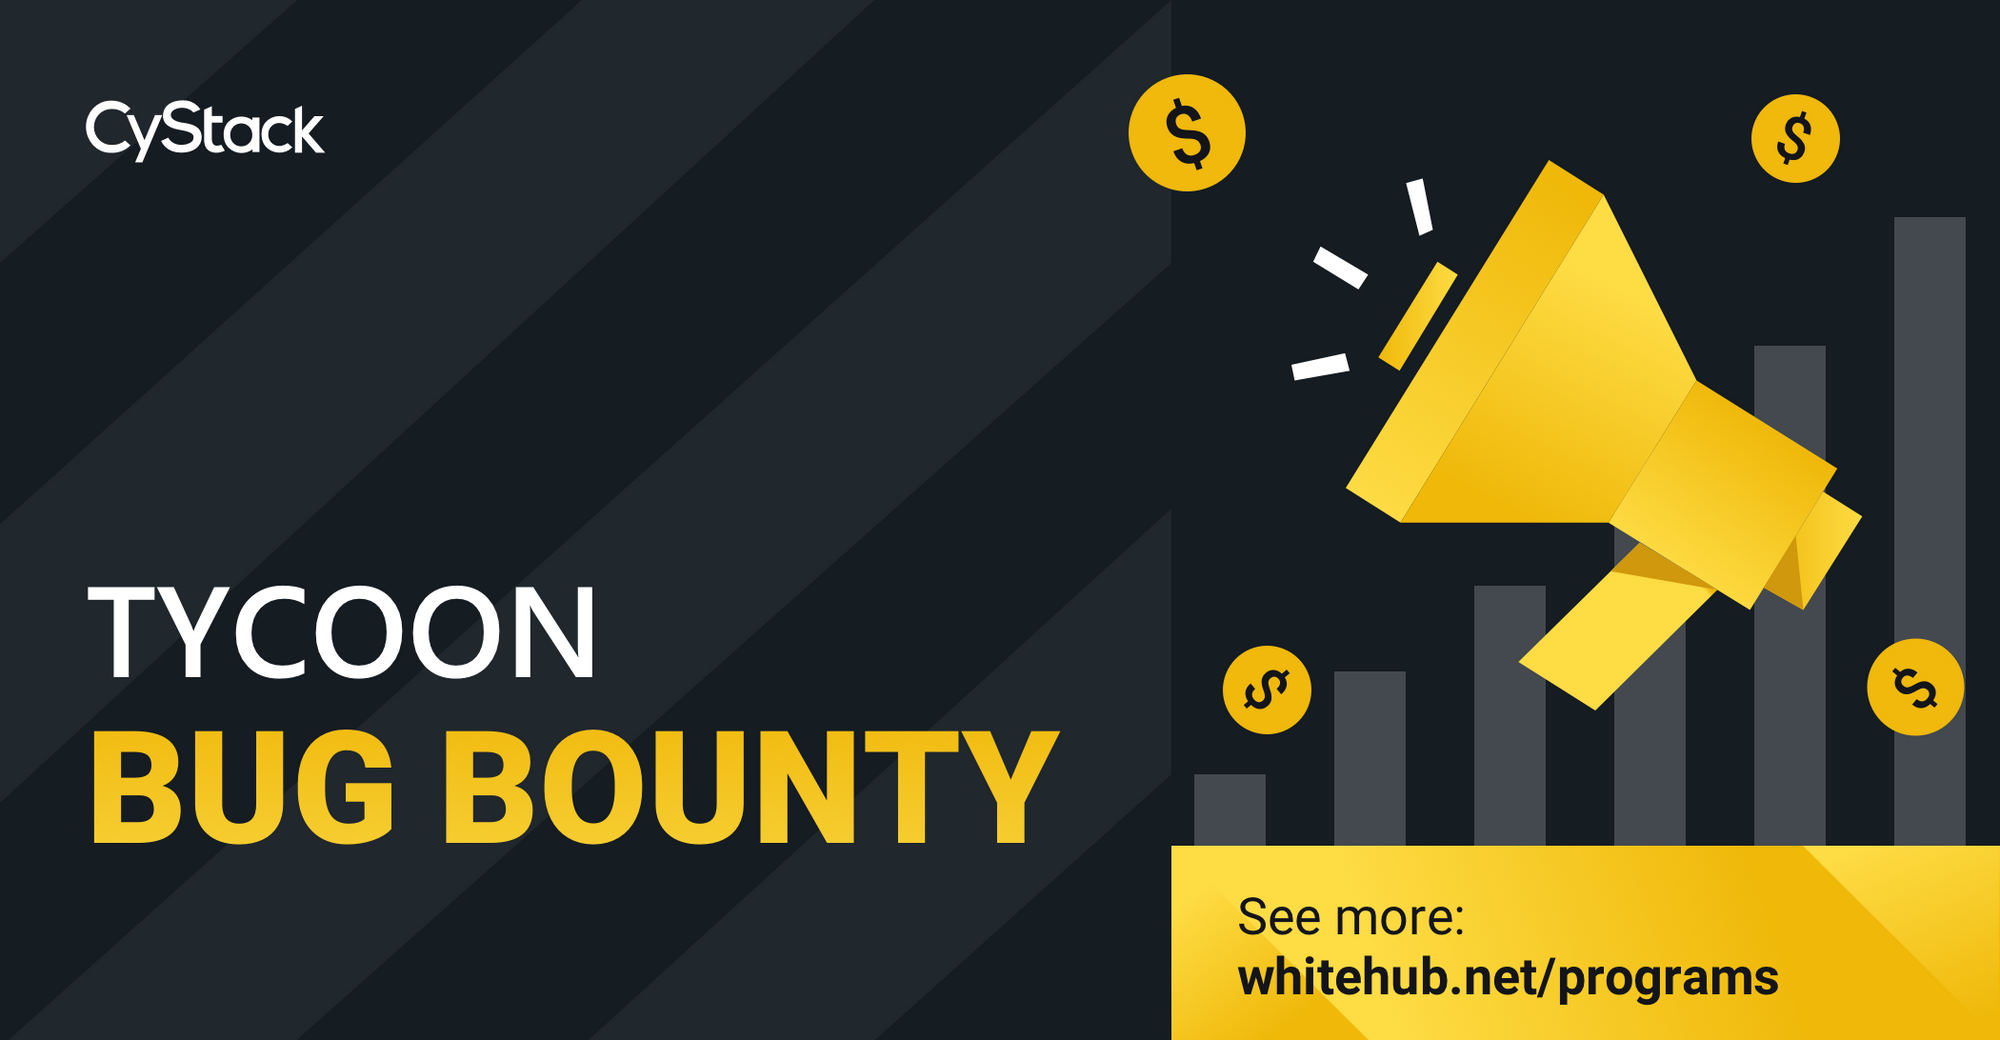 Tycoon.io Bug Bounty Program Announced